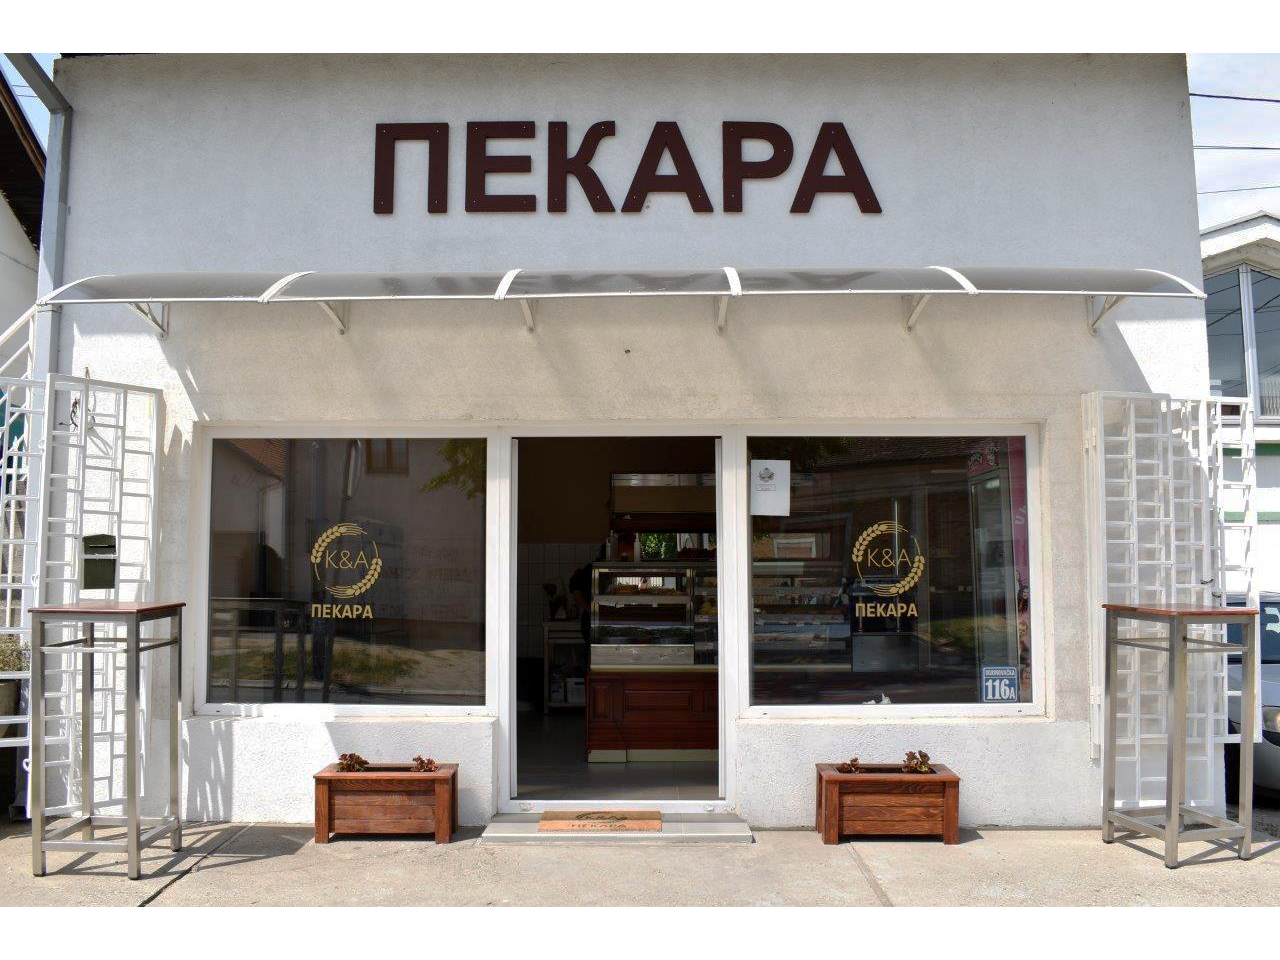 CATERING AND BAKERY K&A Bakeries, bakery equipment Belgrade - Photo 1